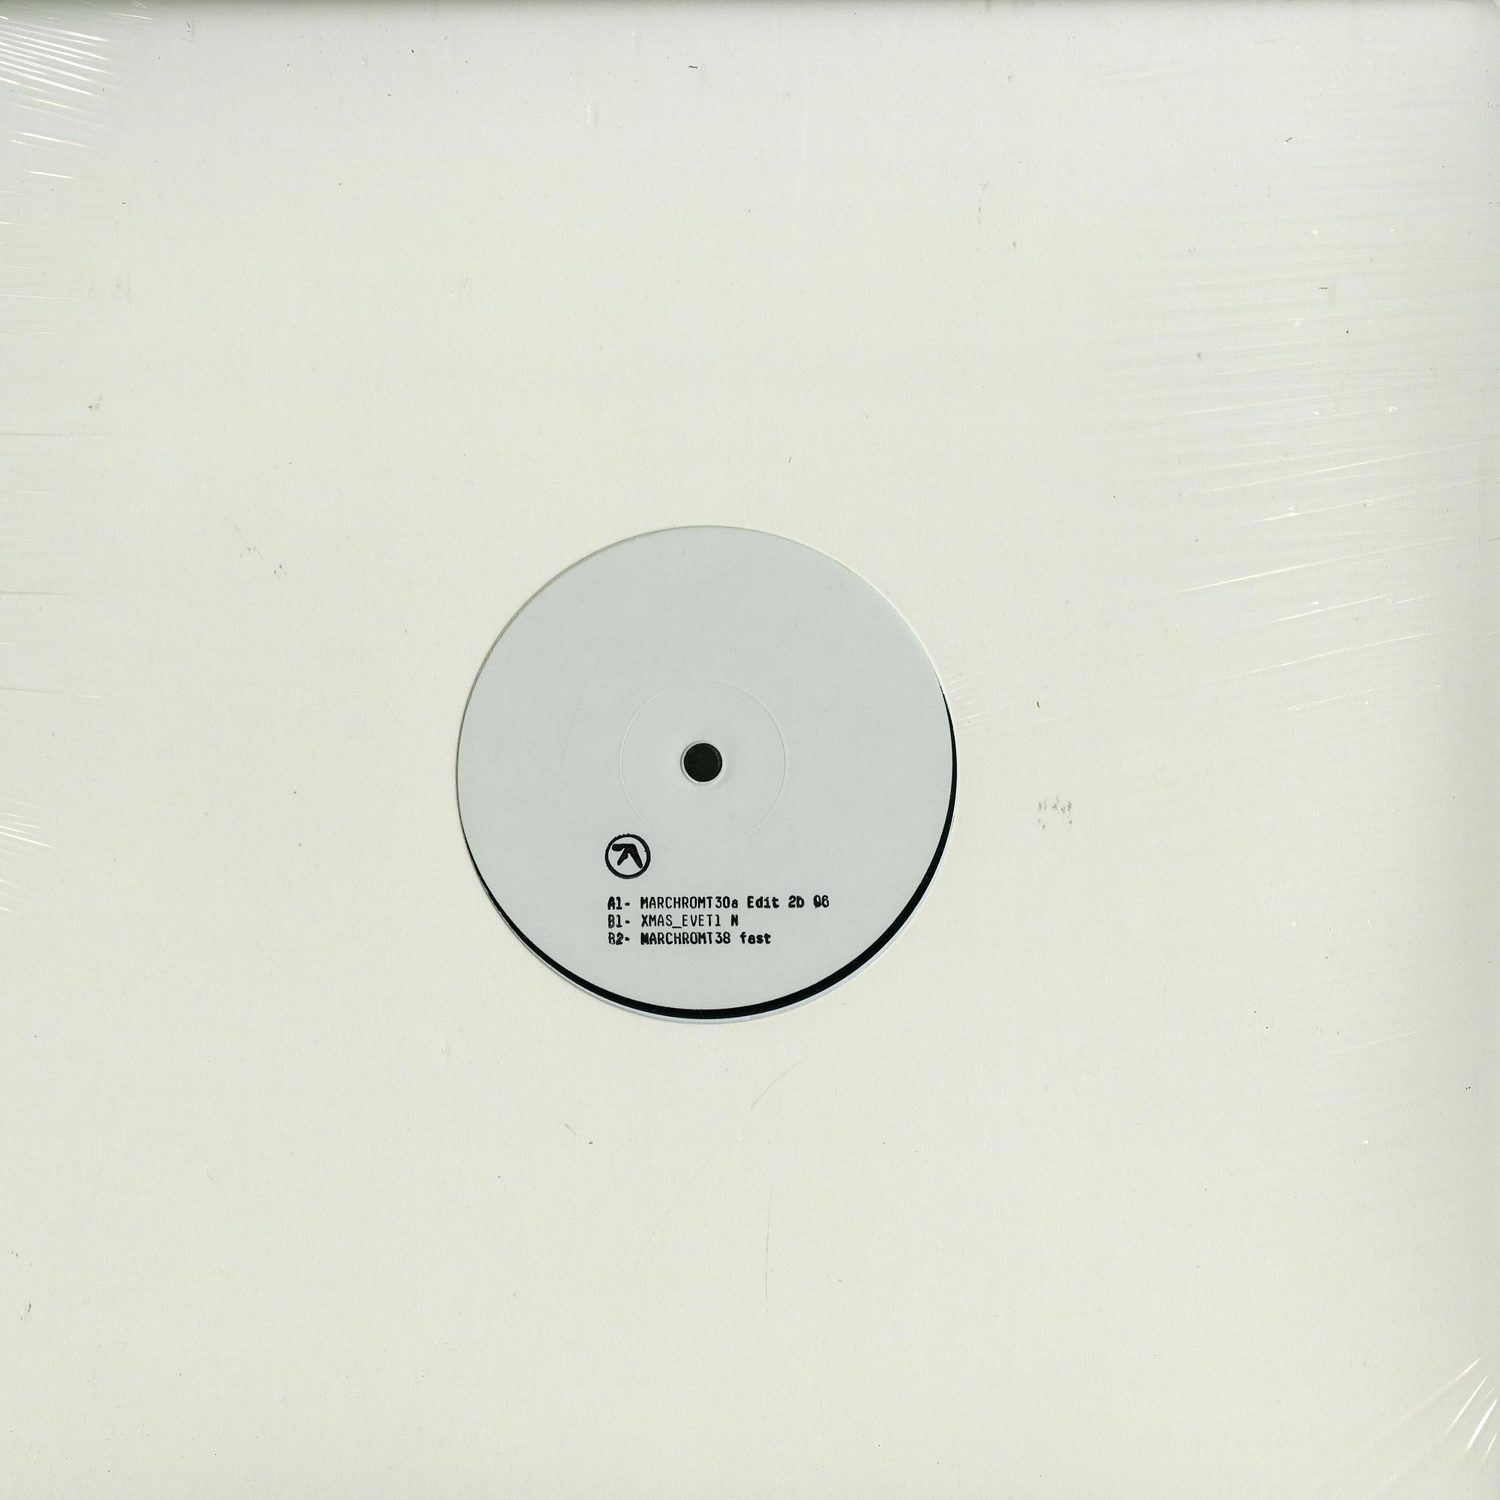 Aphex Twin - MARCHCHROMT30A EDIT 2B 96 EP 